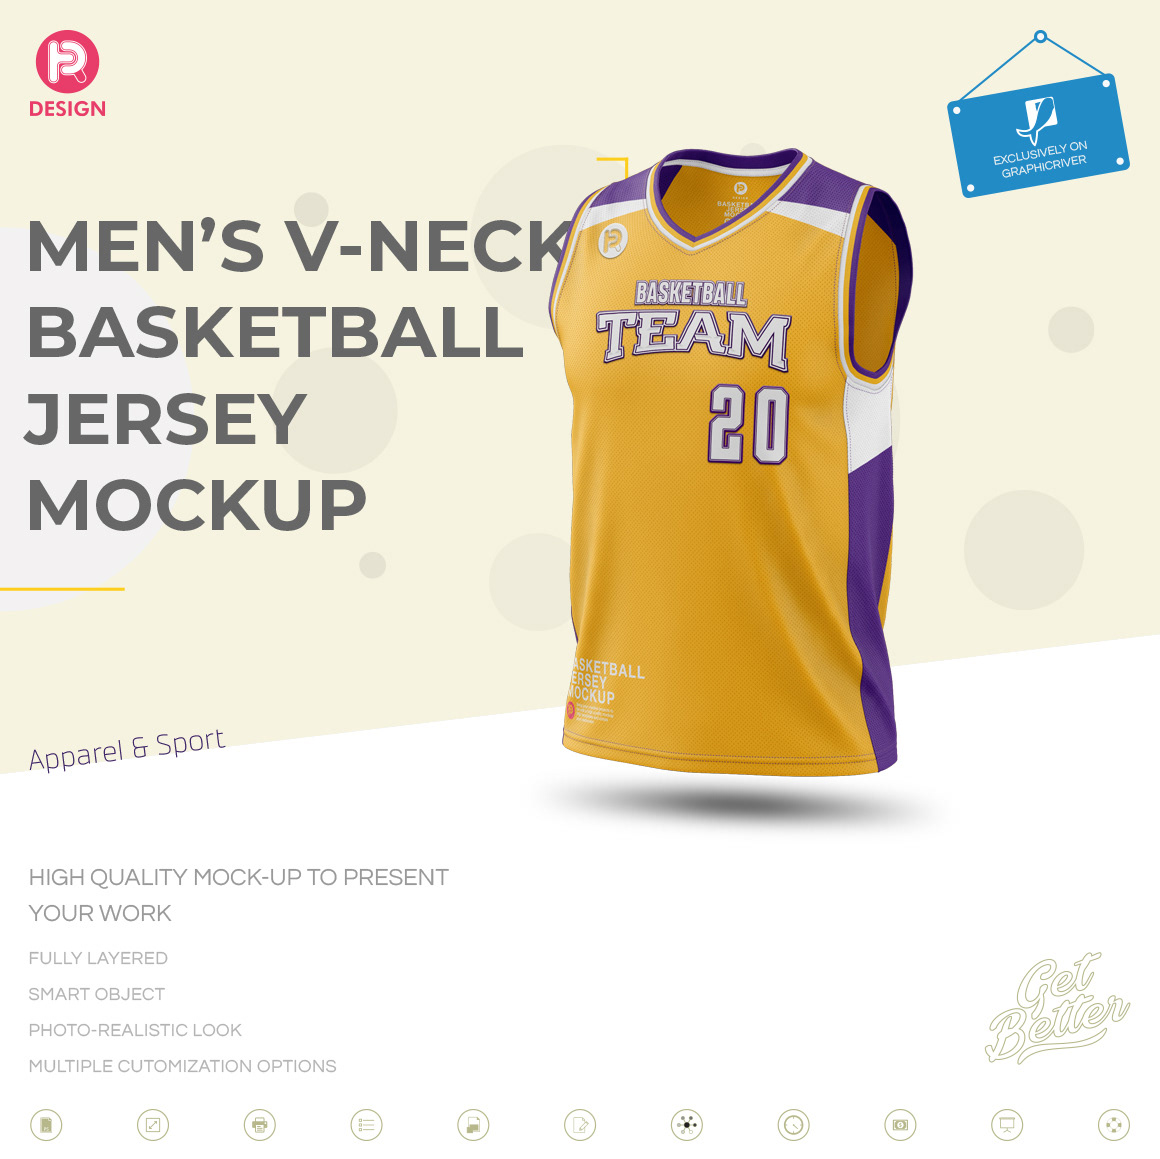 Men’s V-Neck Basketball Jersey Mockup | Behance